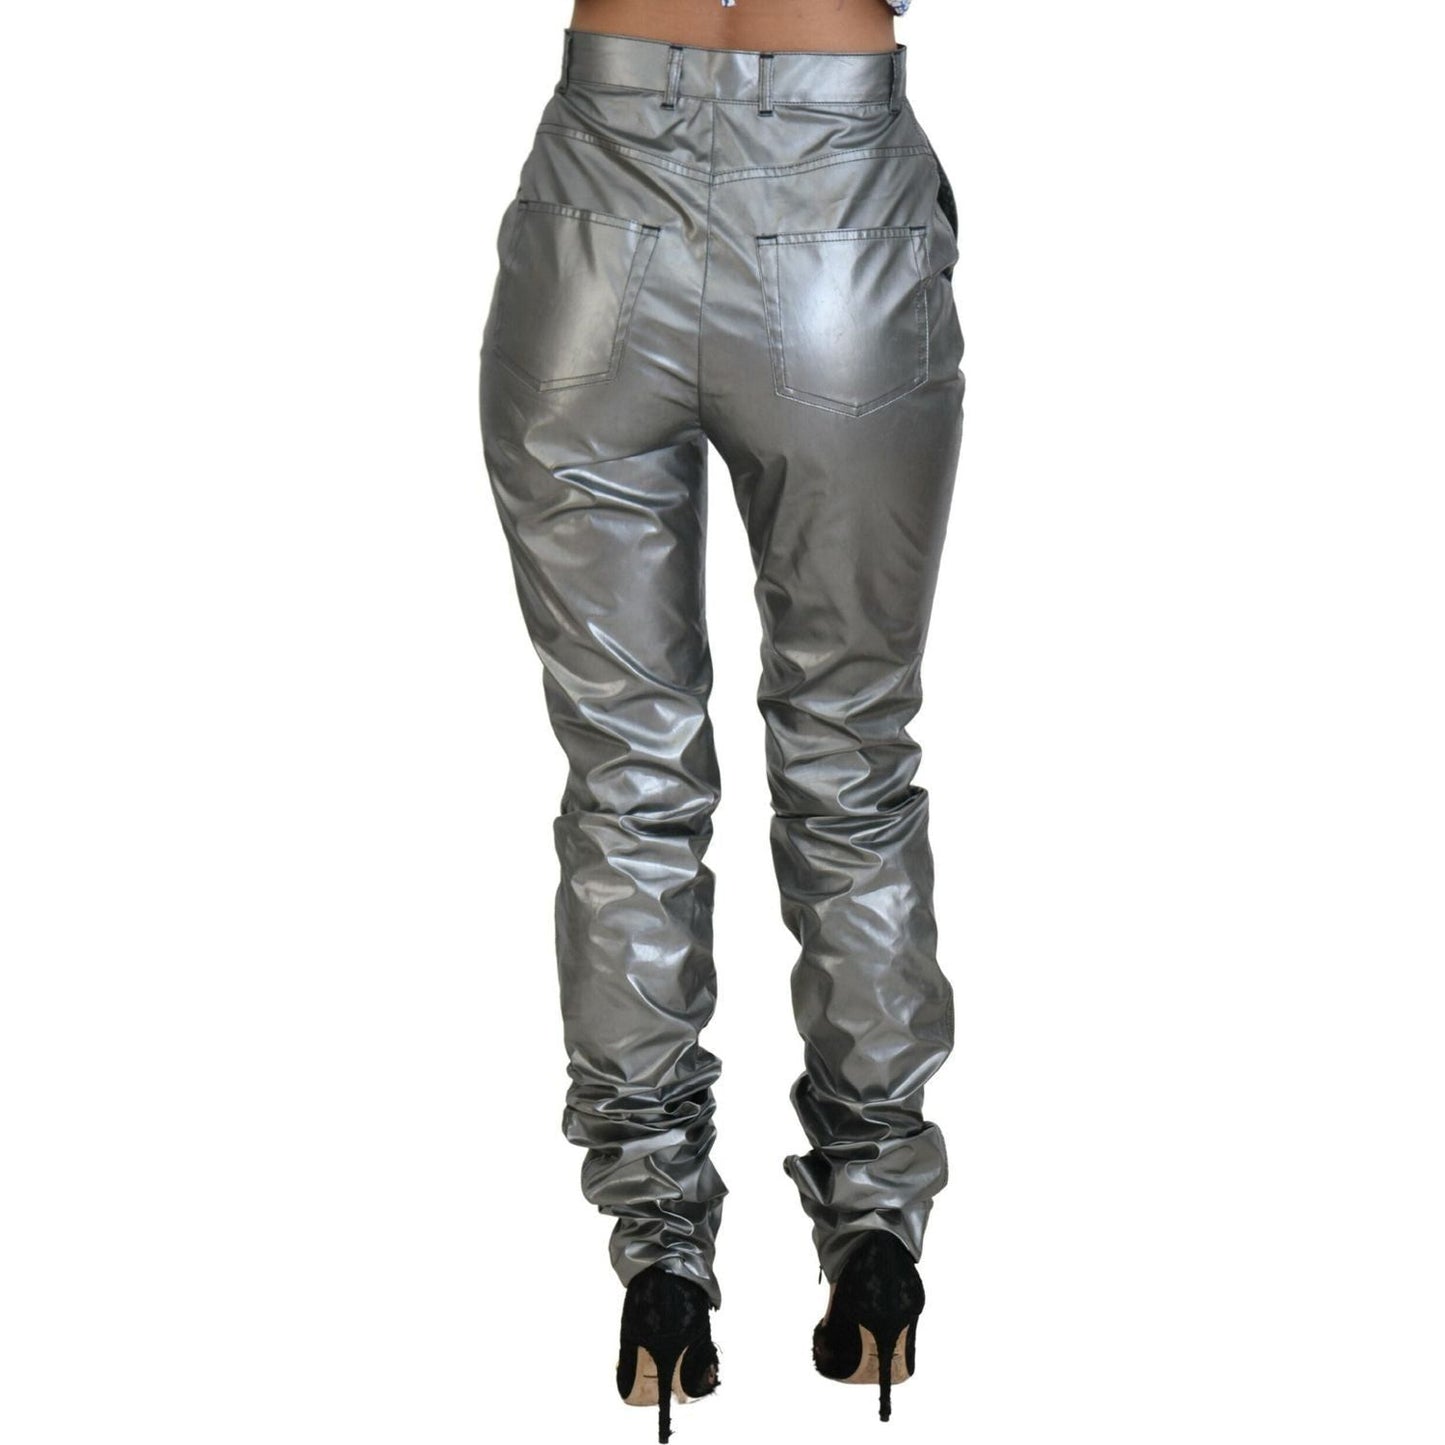 Dolce & Gabbana Elegant High Waist Skinny Pants in Silver metallic-silver-high-waist-skinny-pants IMG_2389-scaled-c57bfa46-73c.jpg